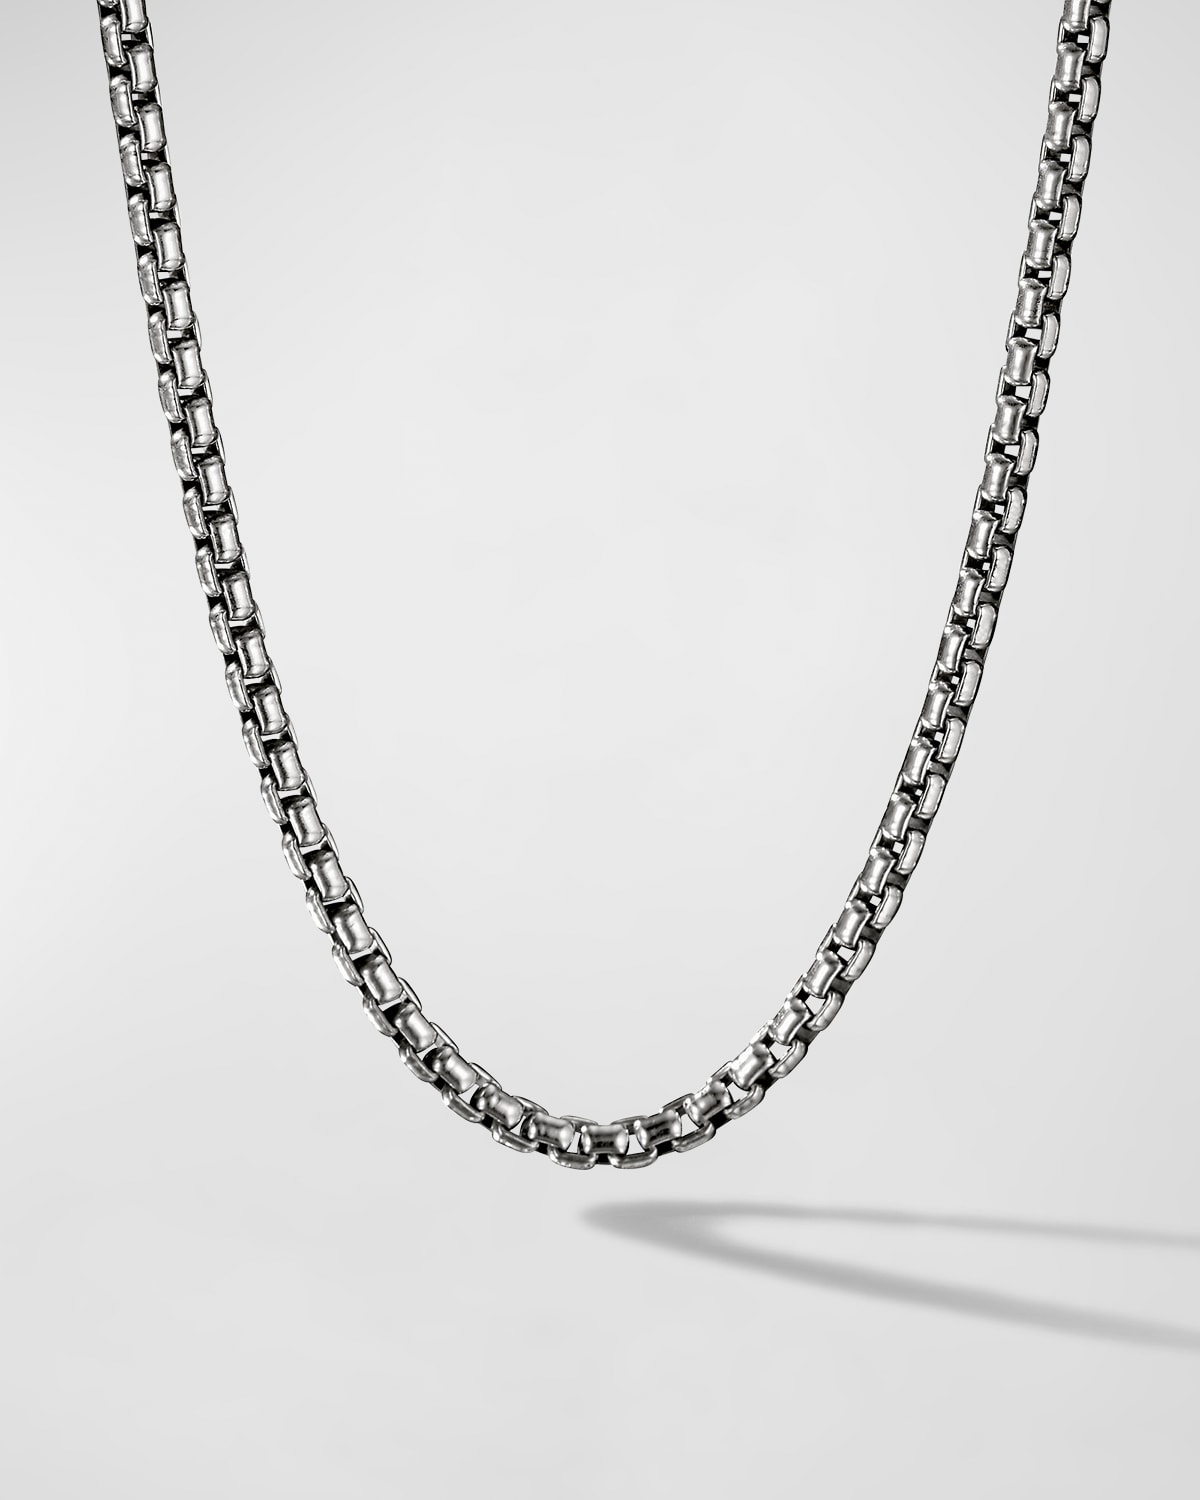 Men's Box Chain Necklace in Silver, 3.6mm, 26"L